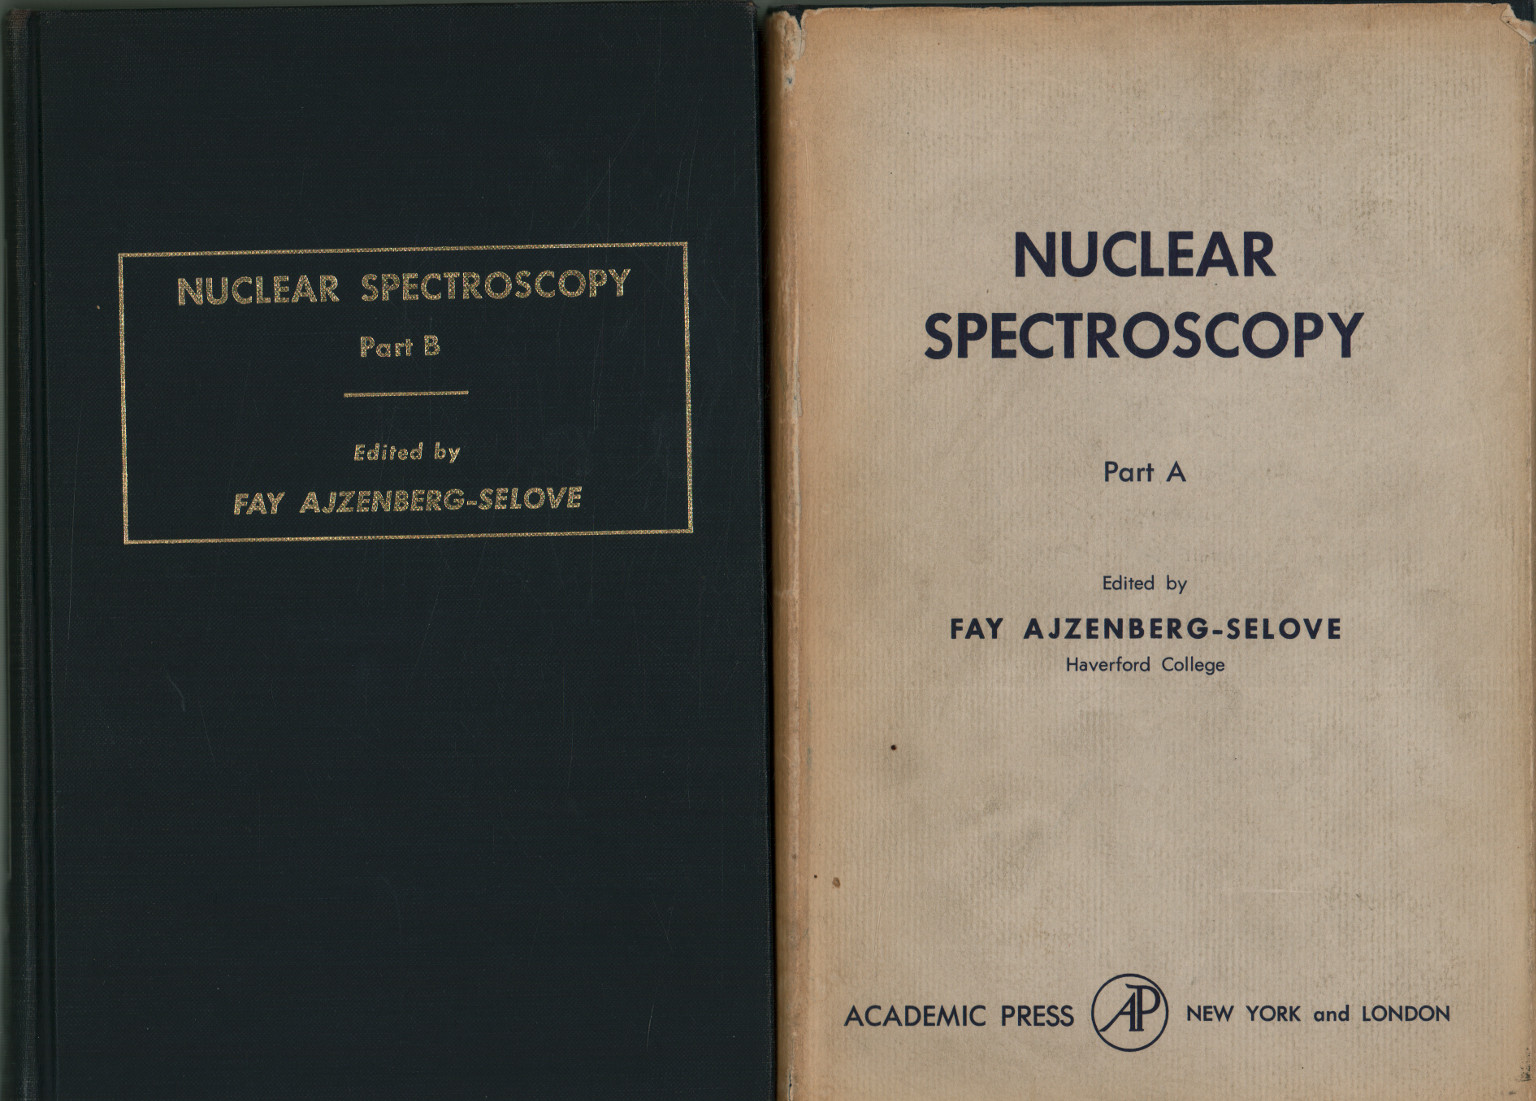 Kernspektroskopie (2 Bände), Fay Ajzenberg-Selove